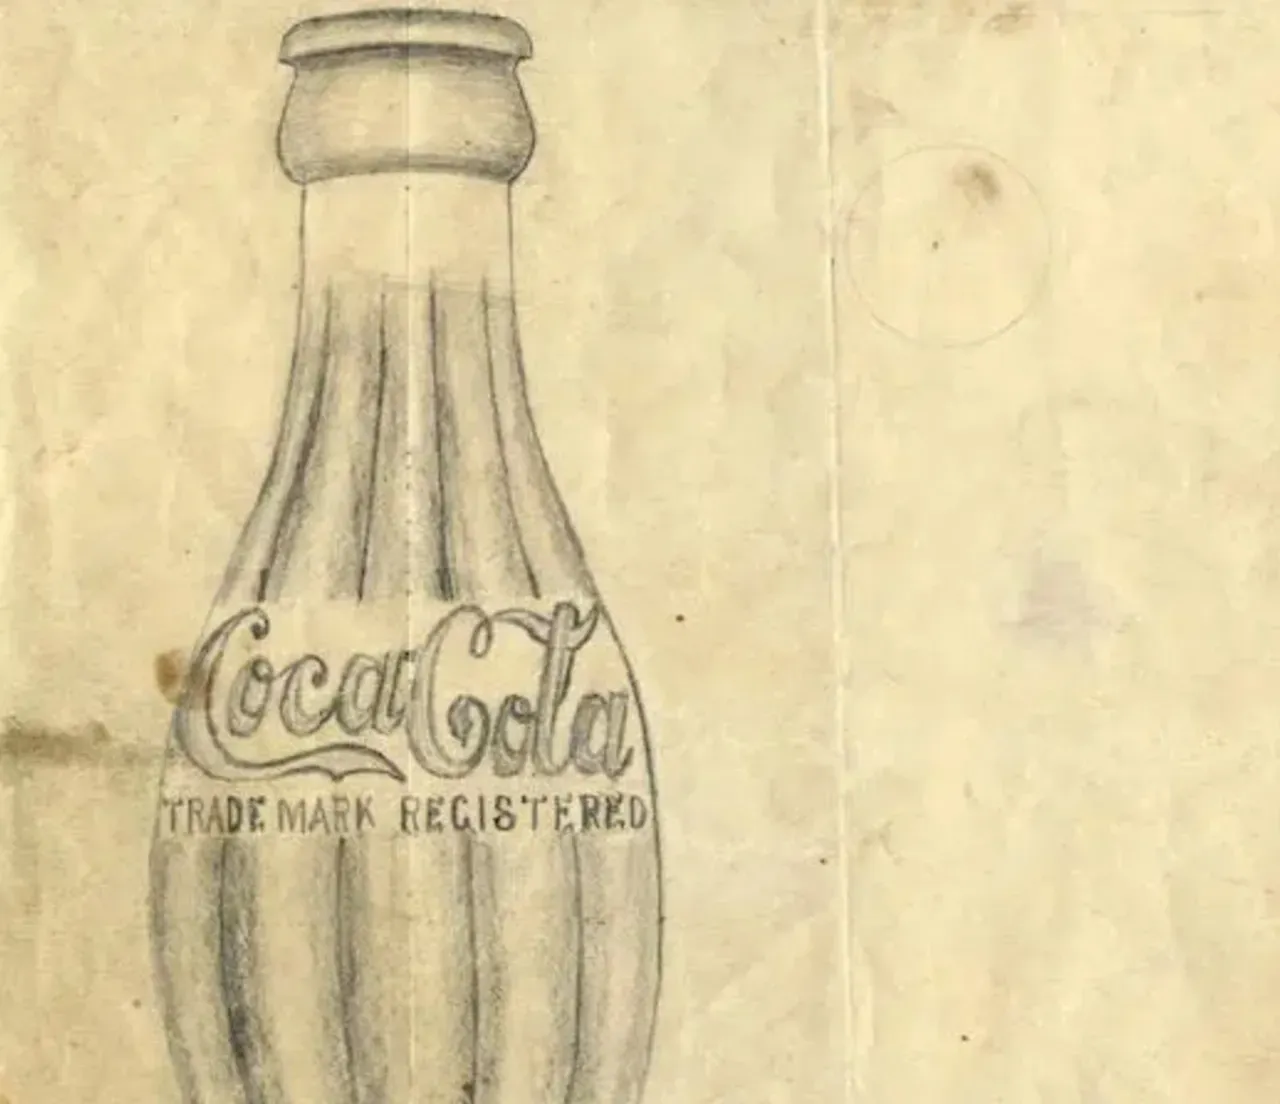 Antique illustration of a Coca-Cola bottle